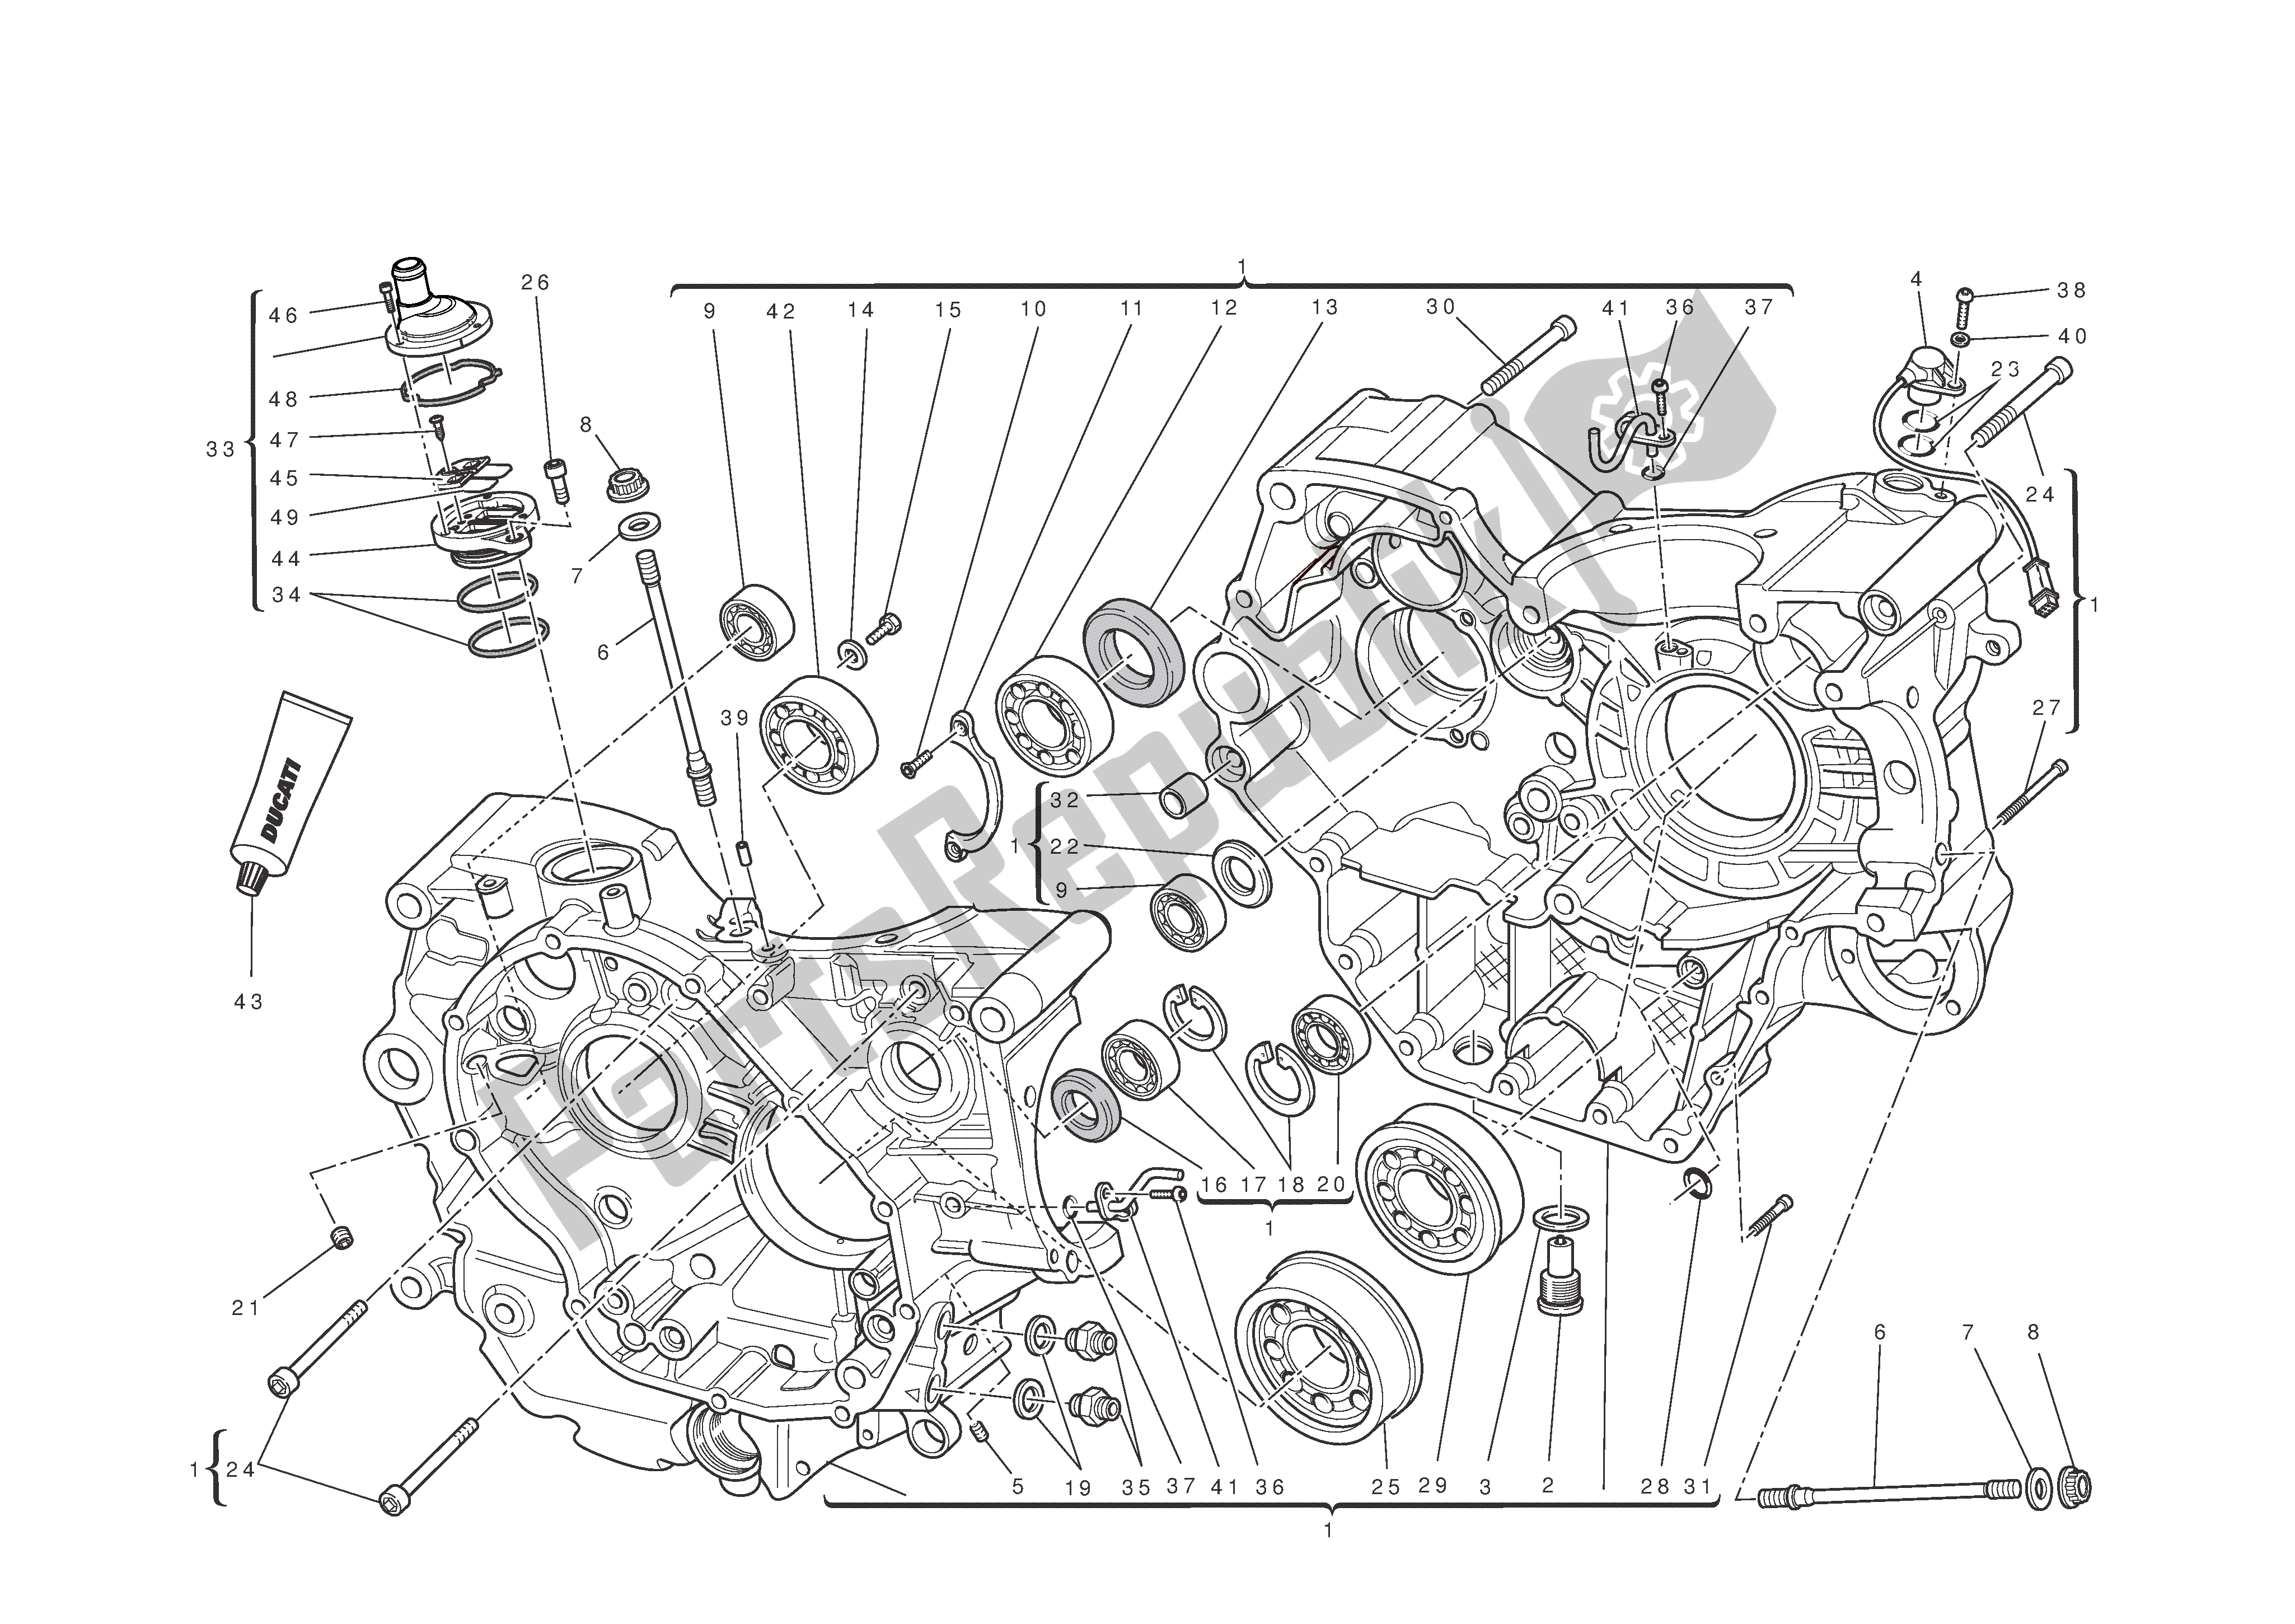 All parts for the Crankcase Halves of the Ducati Hypermotard EVO SP Corse Edition 1100 2012